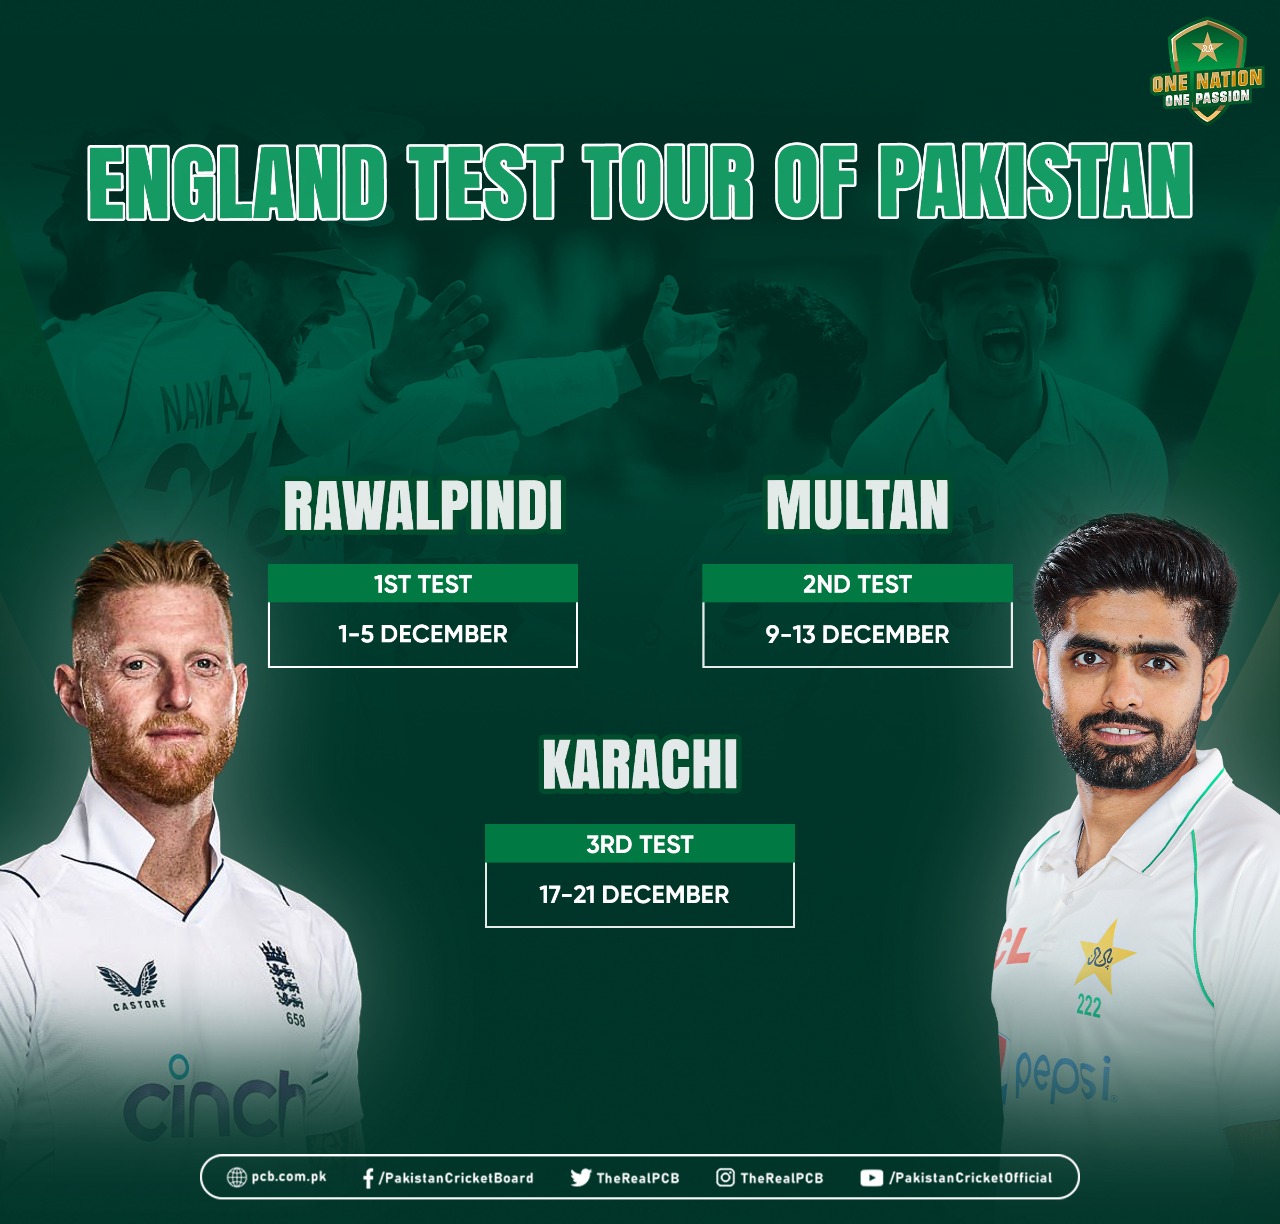 PCB confirms details of England's Test tour of Pakistan Press Release